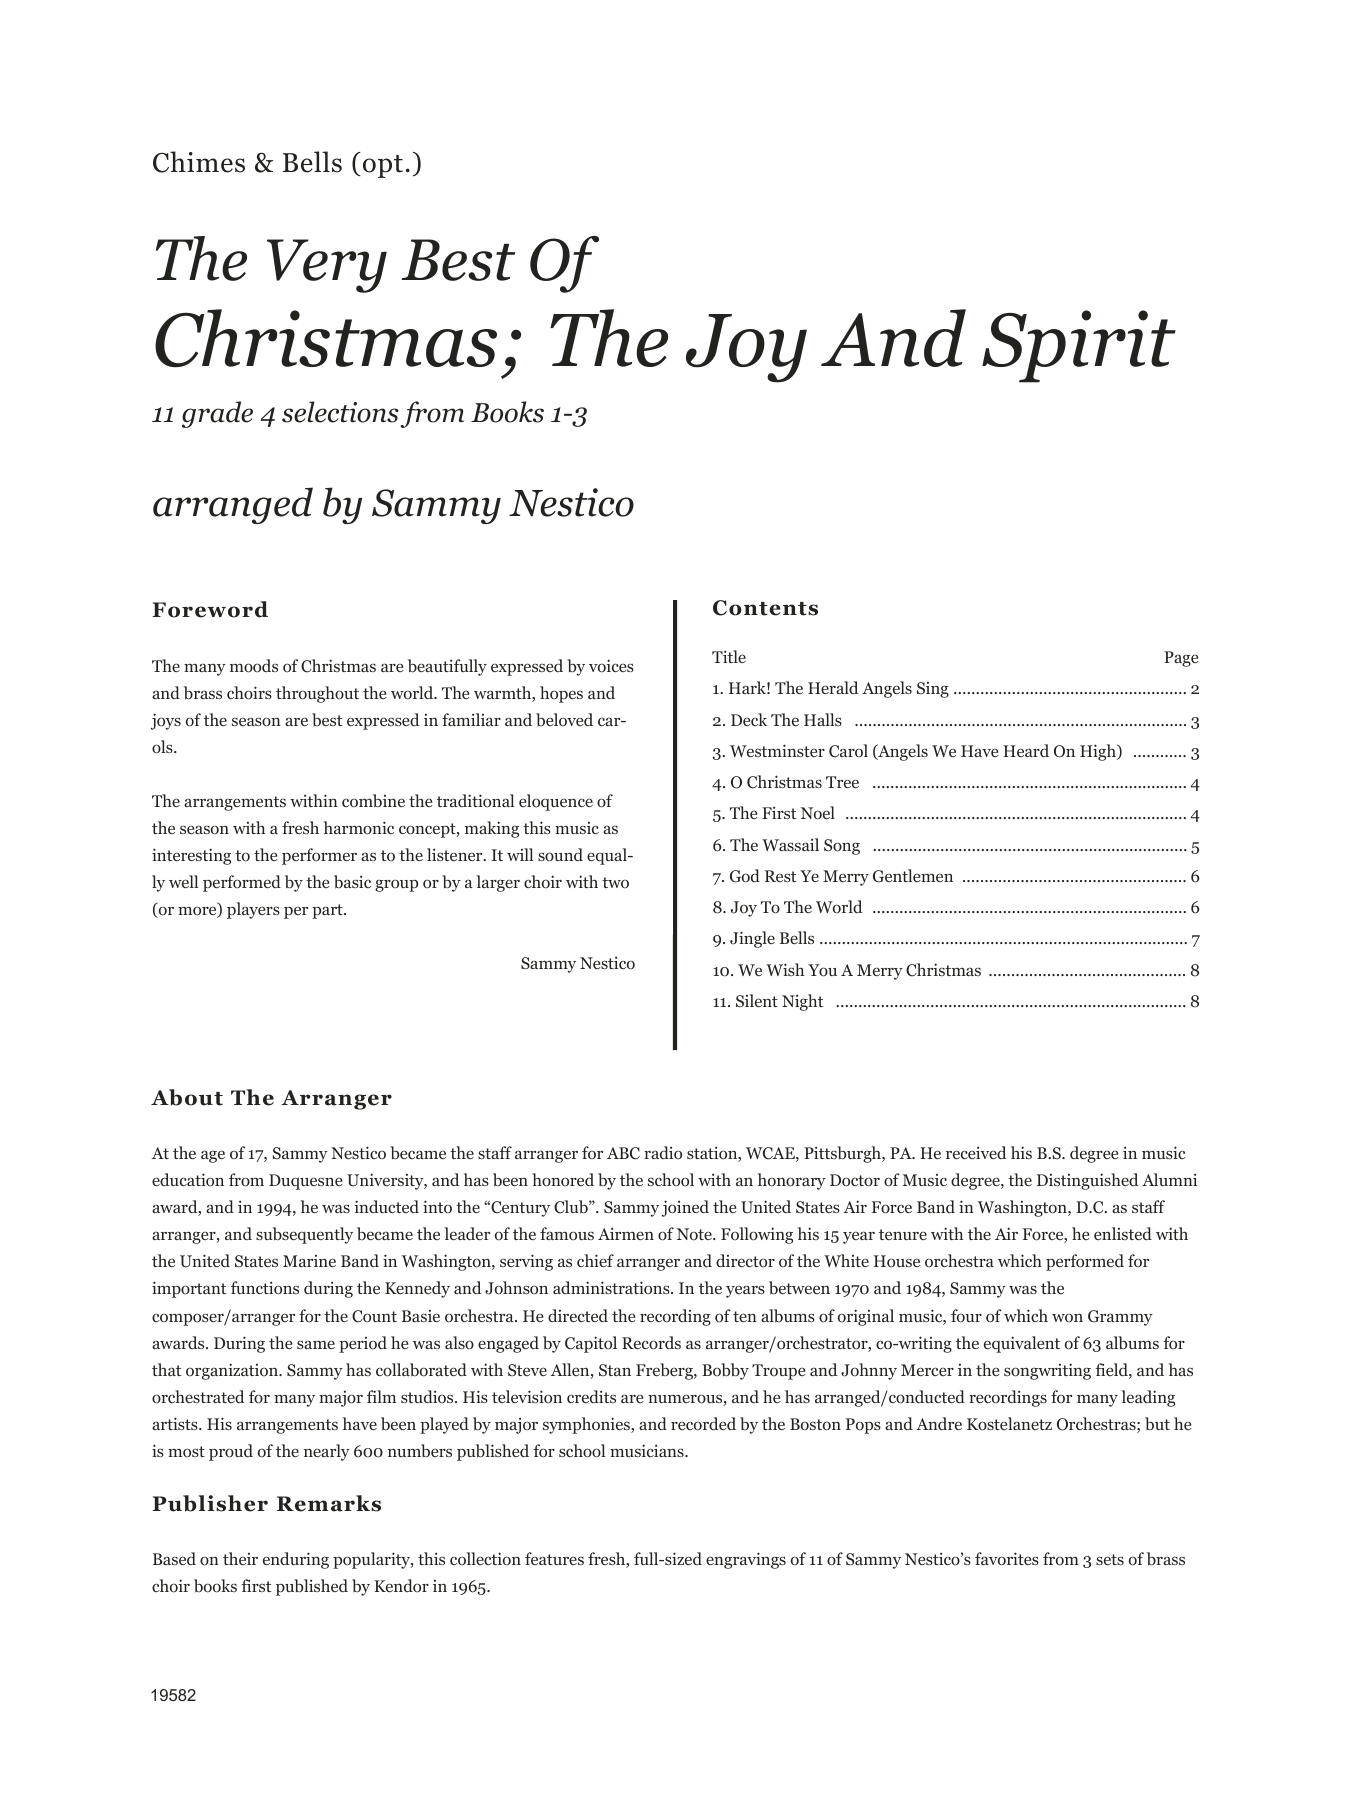 Very Best Of Christmas; The Joy And Spirit (Books 1-3) - Bells (Brass Ensemble) von Sammy Nestico